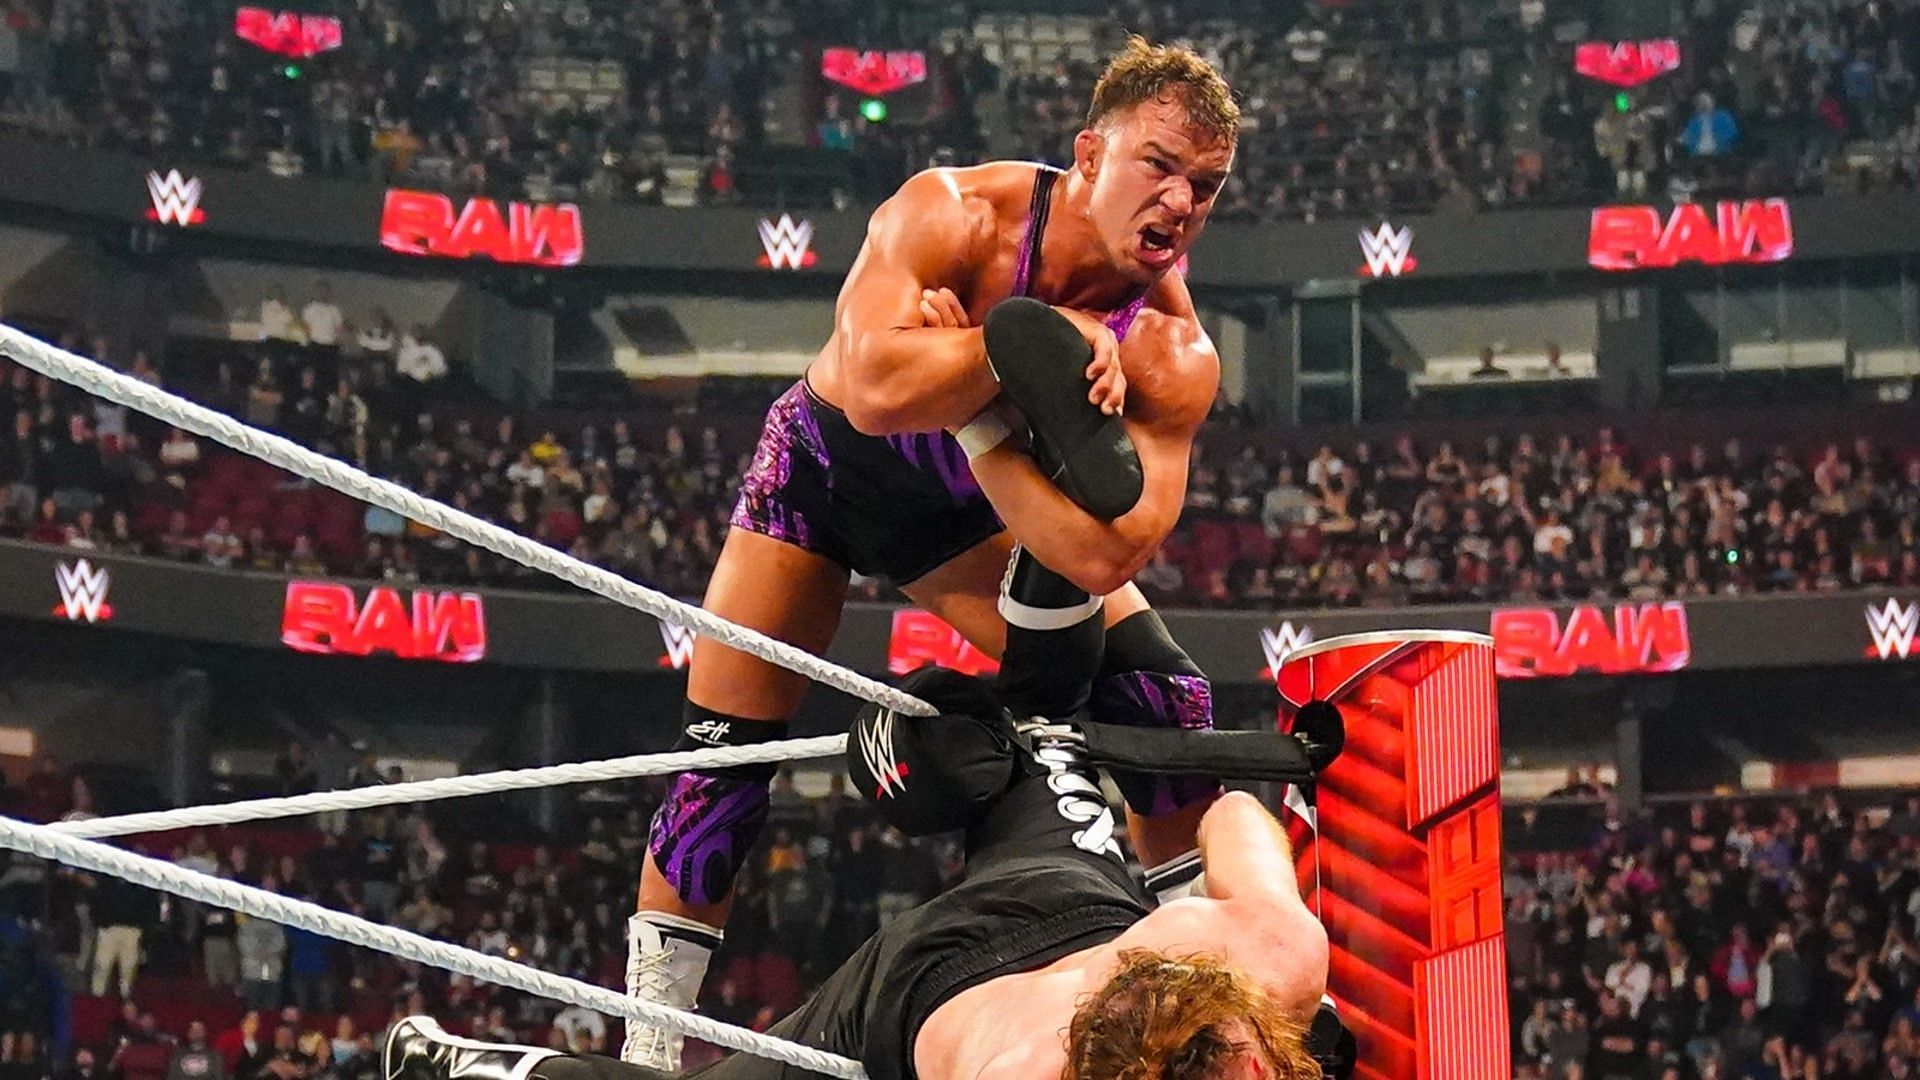 Chad Gable snaps on Sami Zayn to end WWE RAW